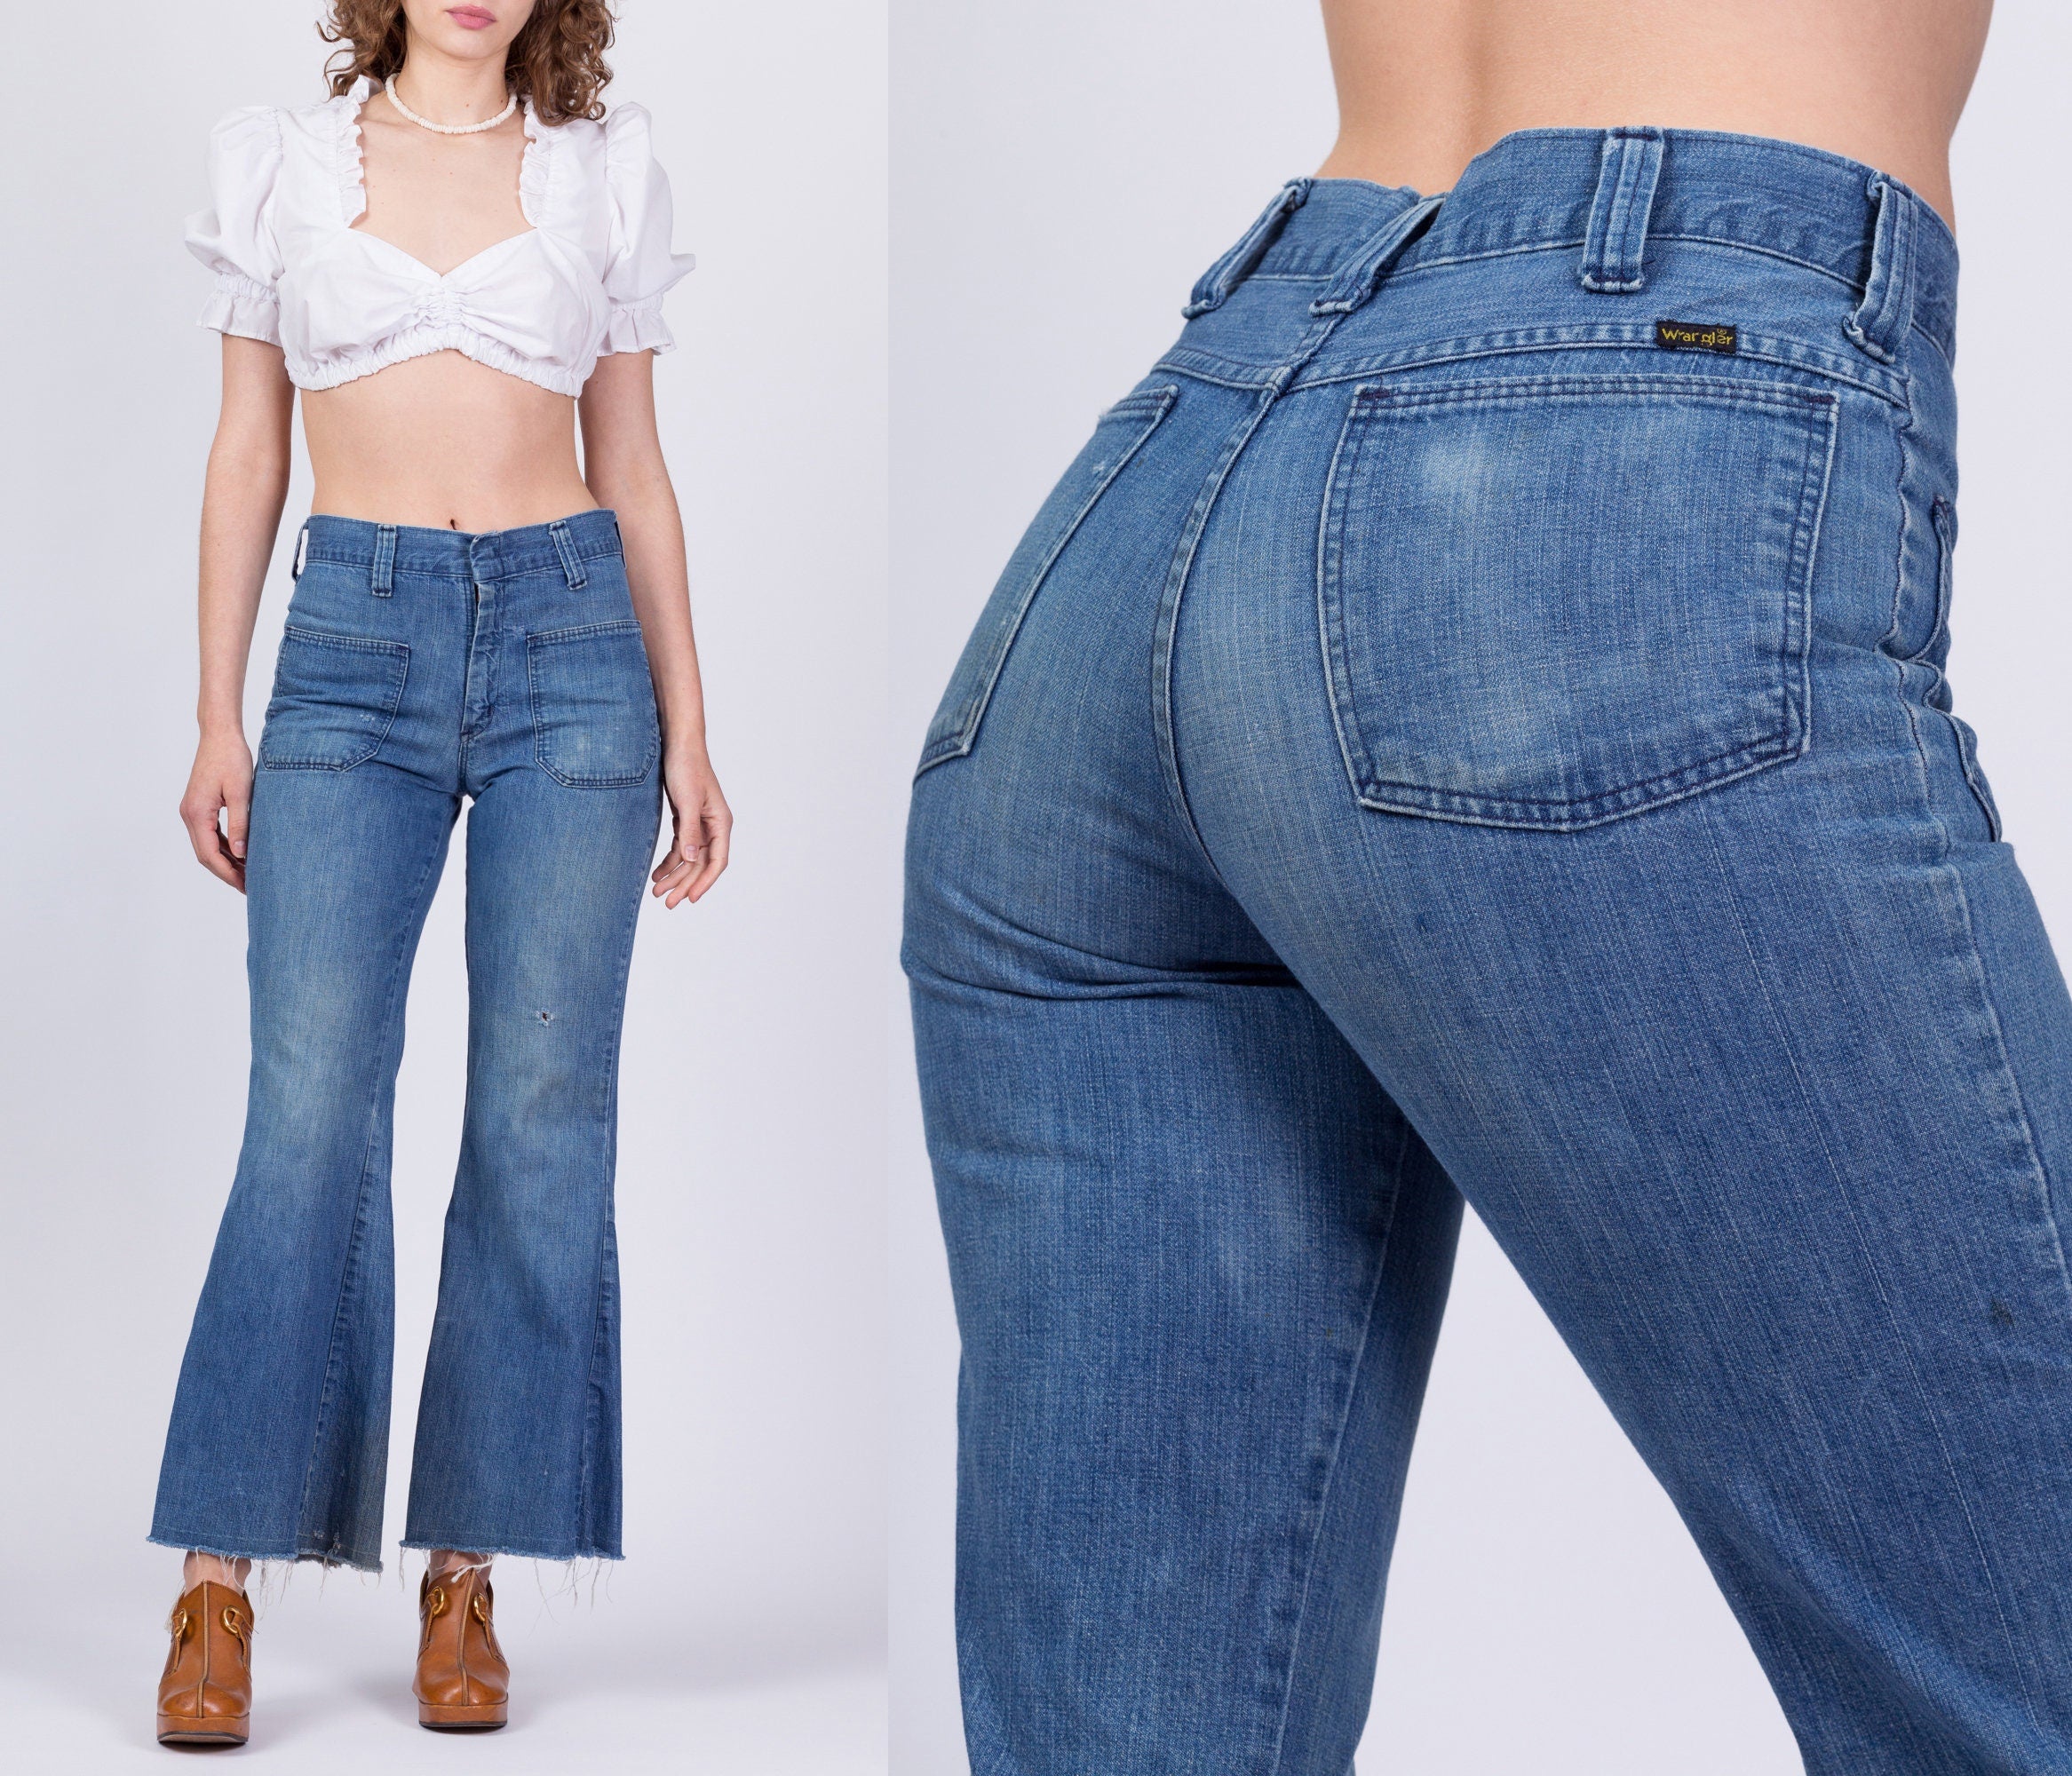 Wrangler Star 70s Vintage 100% 12oz Cotton Denim BIG Bell Bottom Jeans